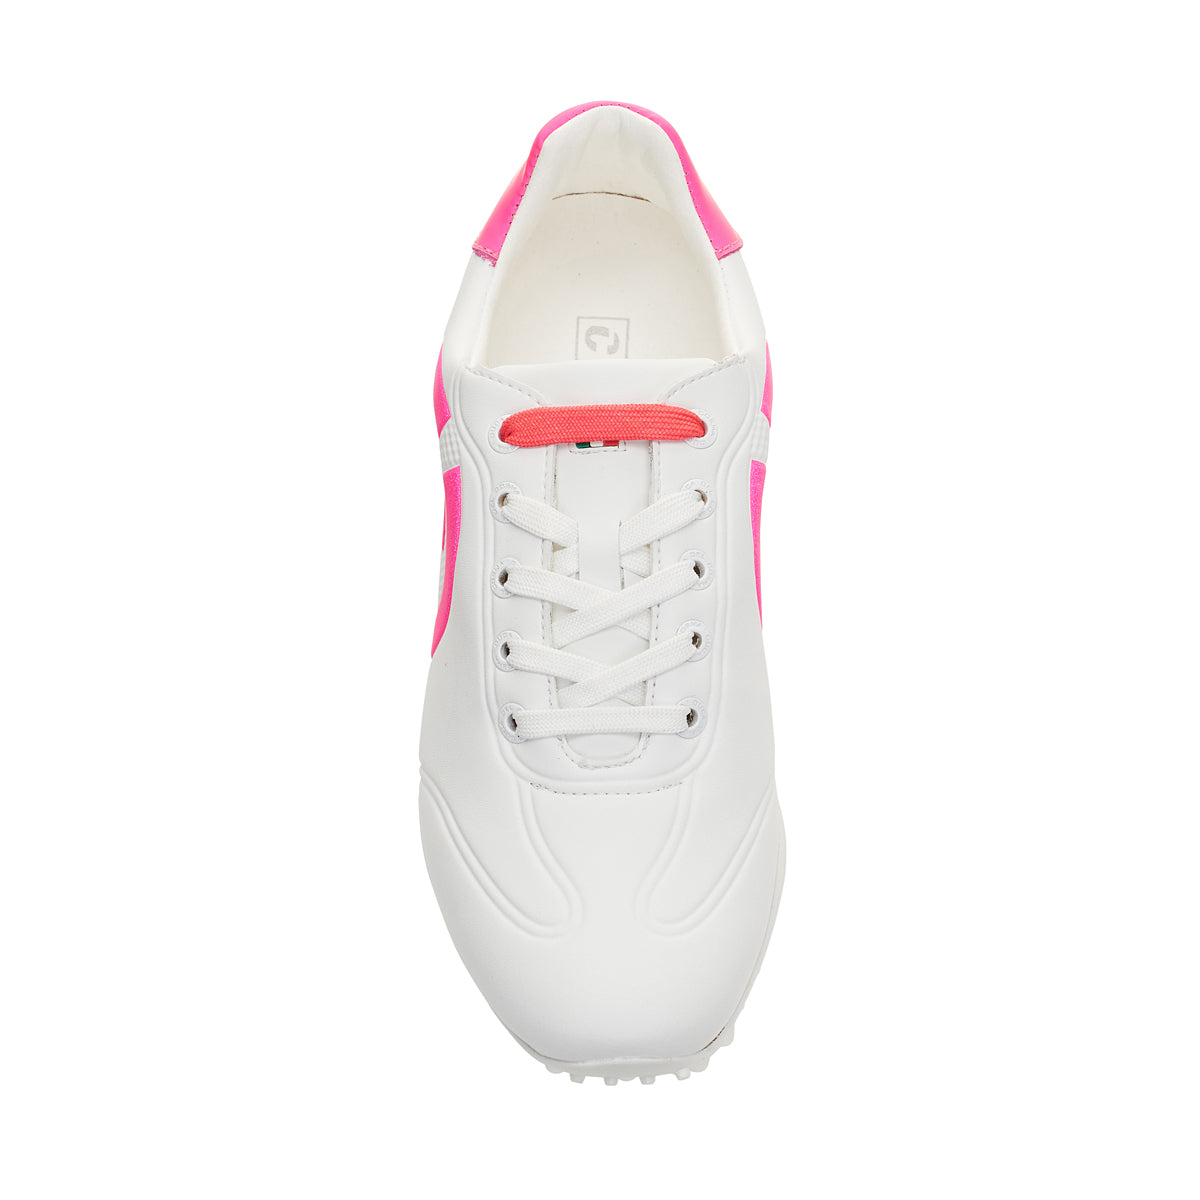 Women's Queenscup White / Pink Golf Shoe